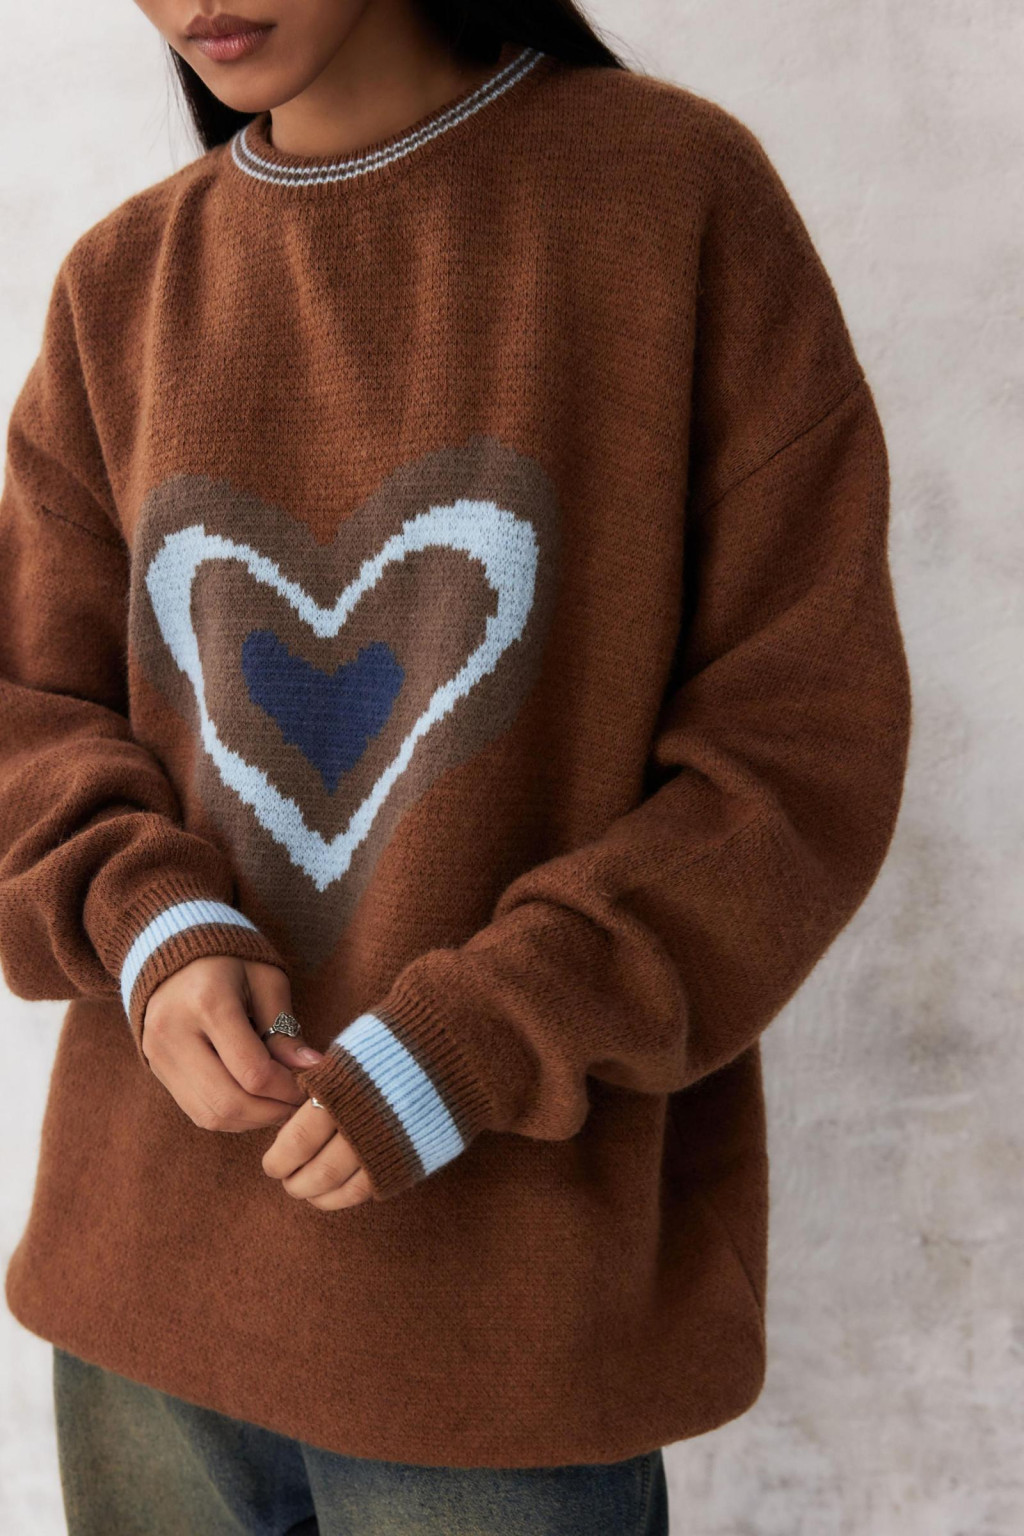 brązowy sweter oversize wzór serce